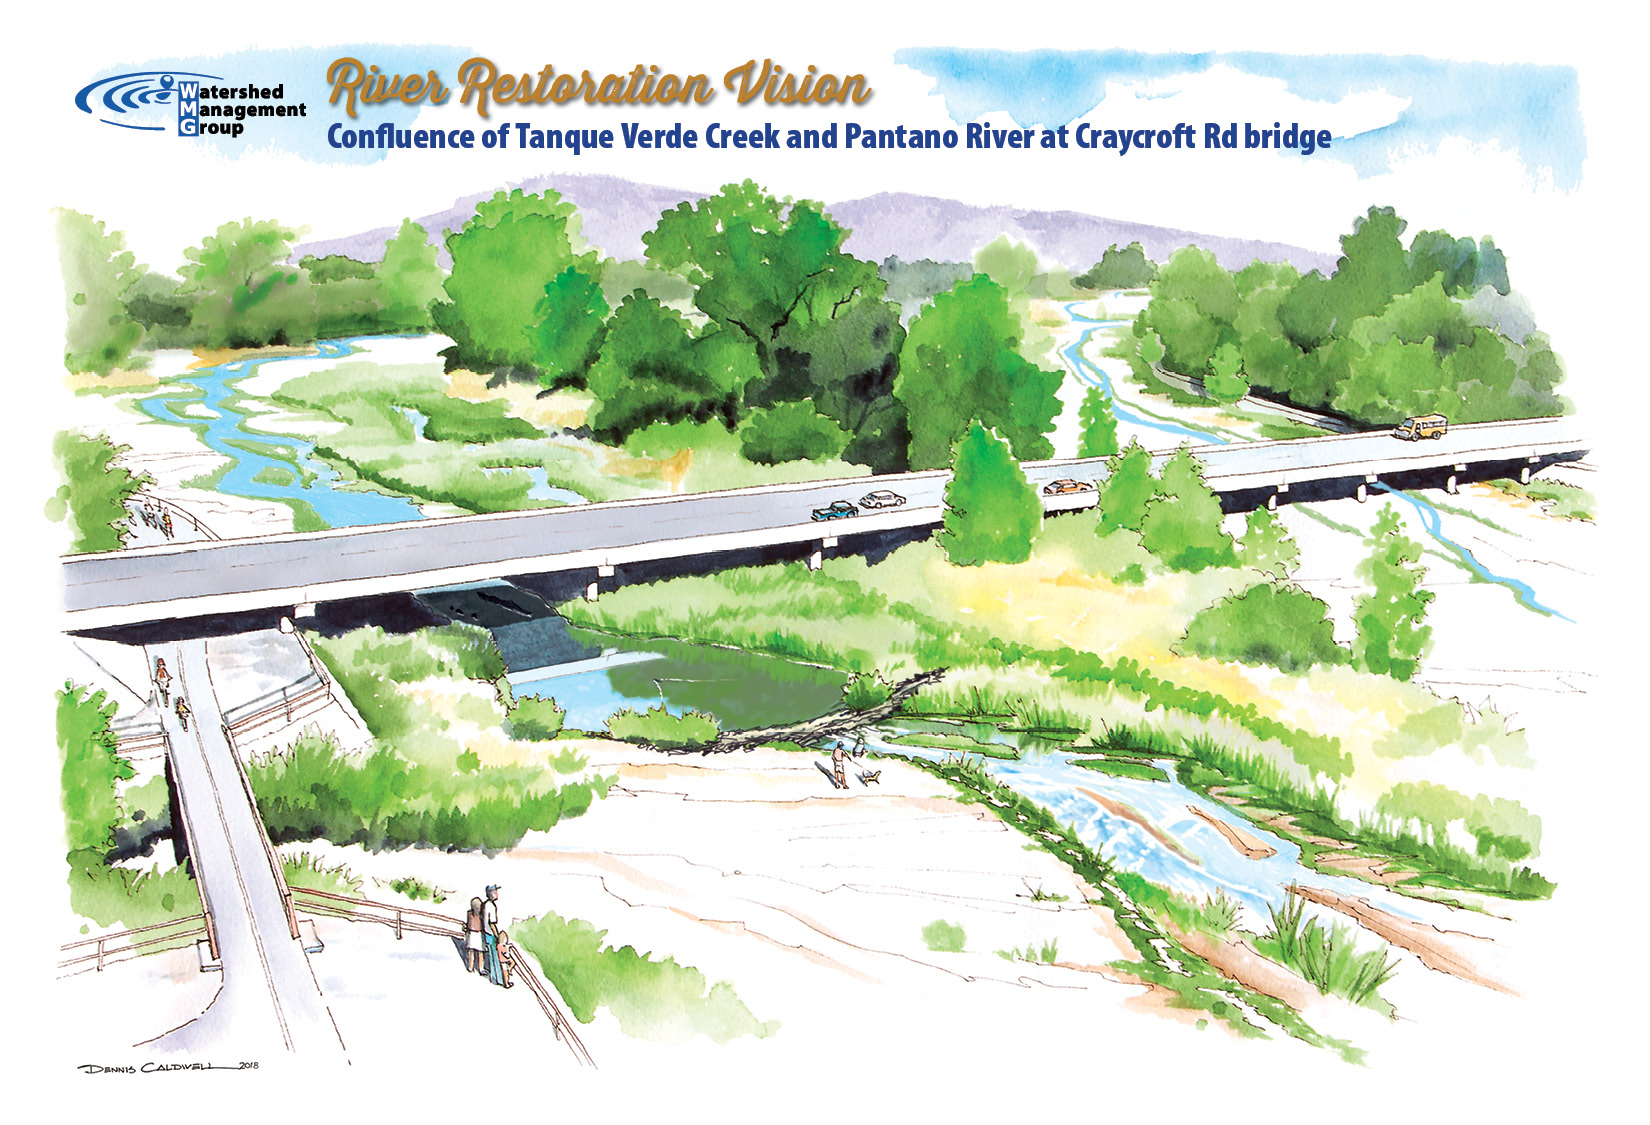 River restoration vision - Confluence of Tanque Verde Creek and Pantano River at Craycroft Rd bridge